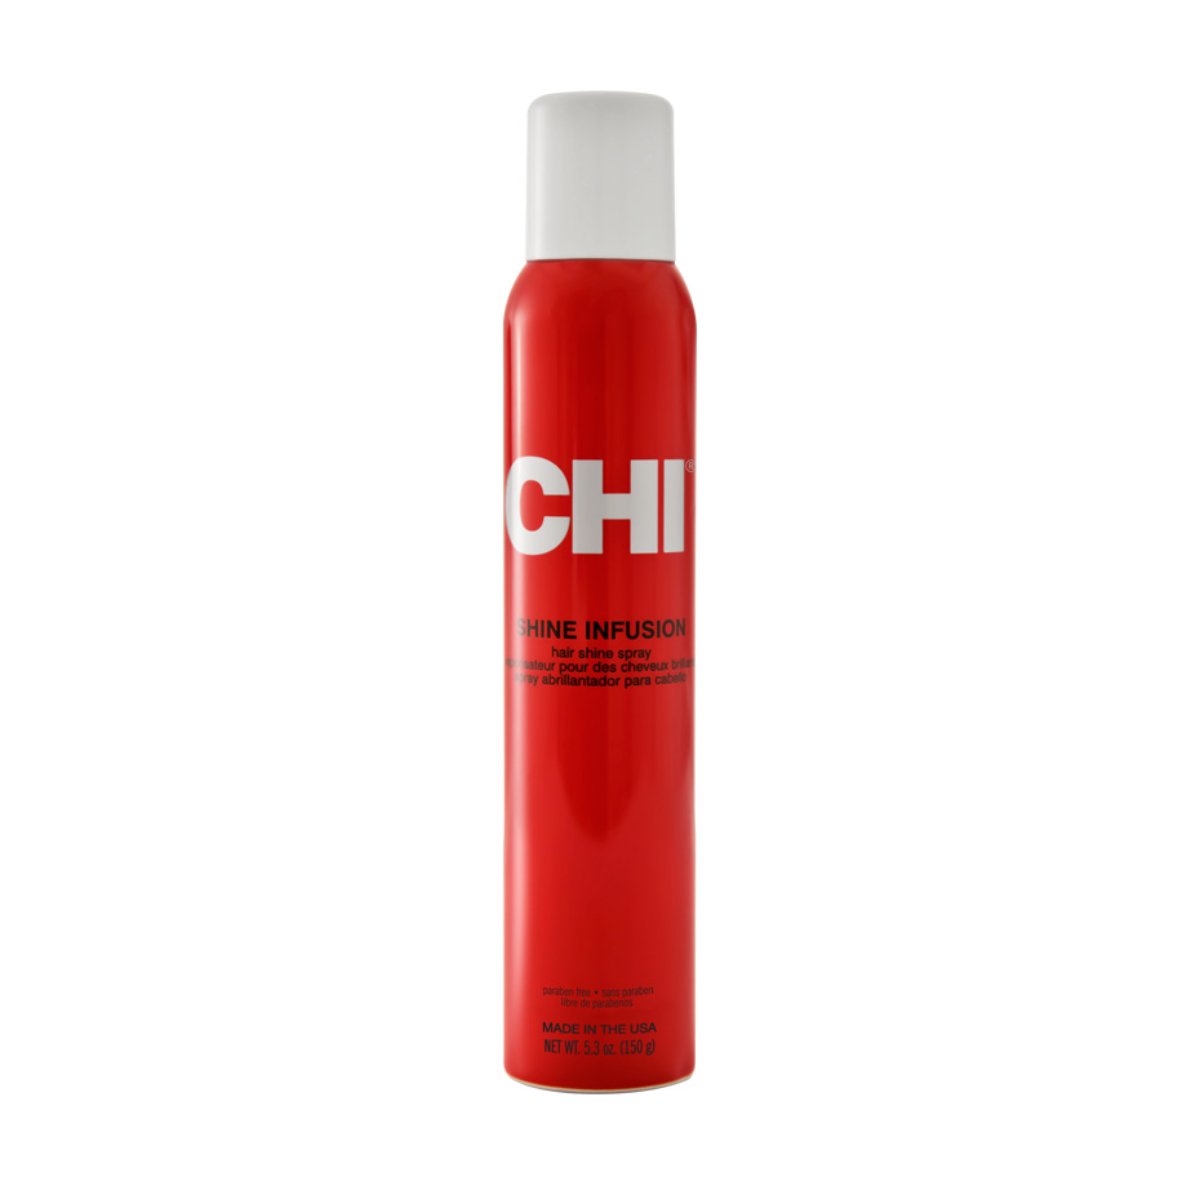 CHI Shine Infusion Hairspray